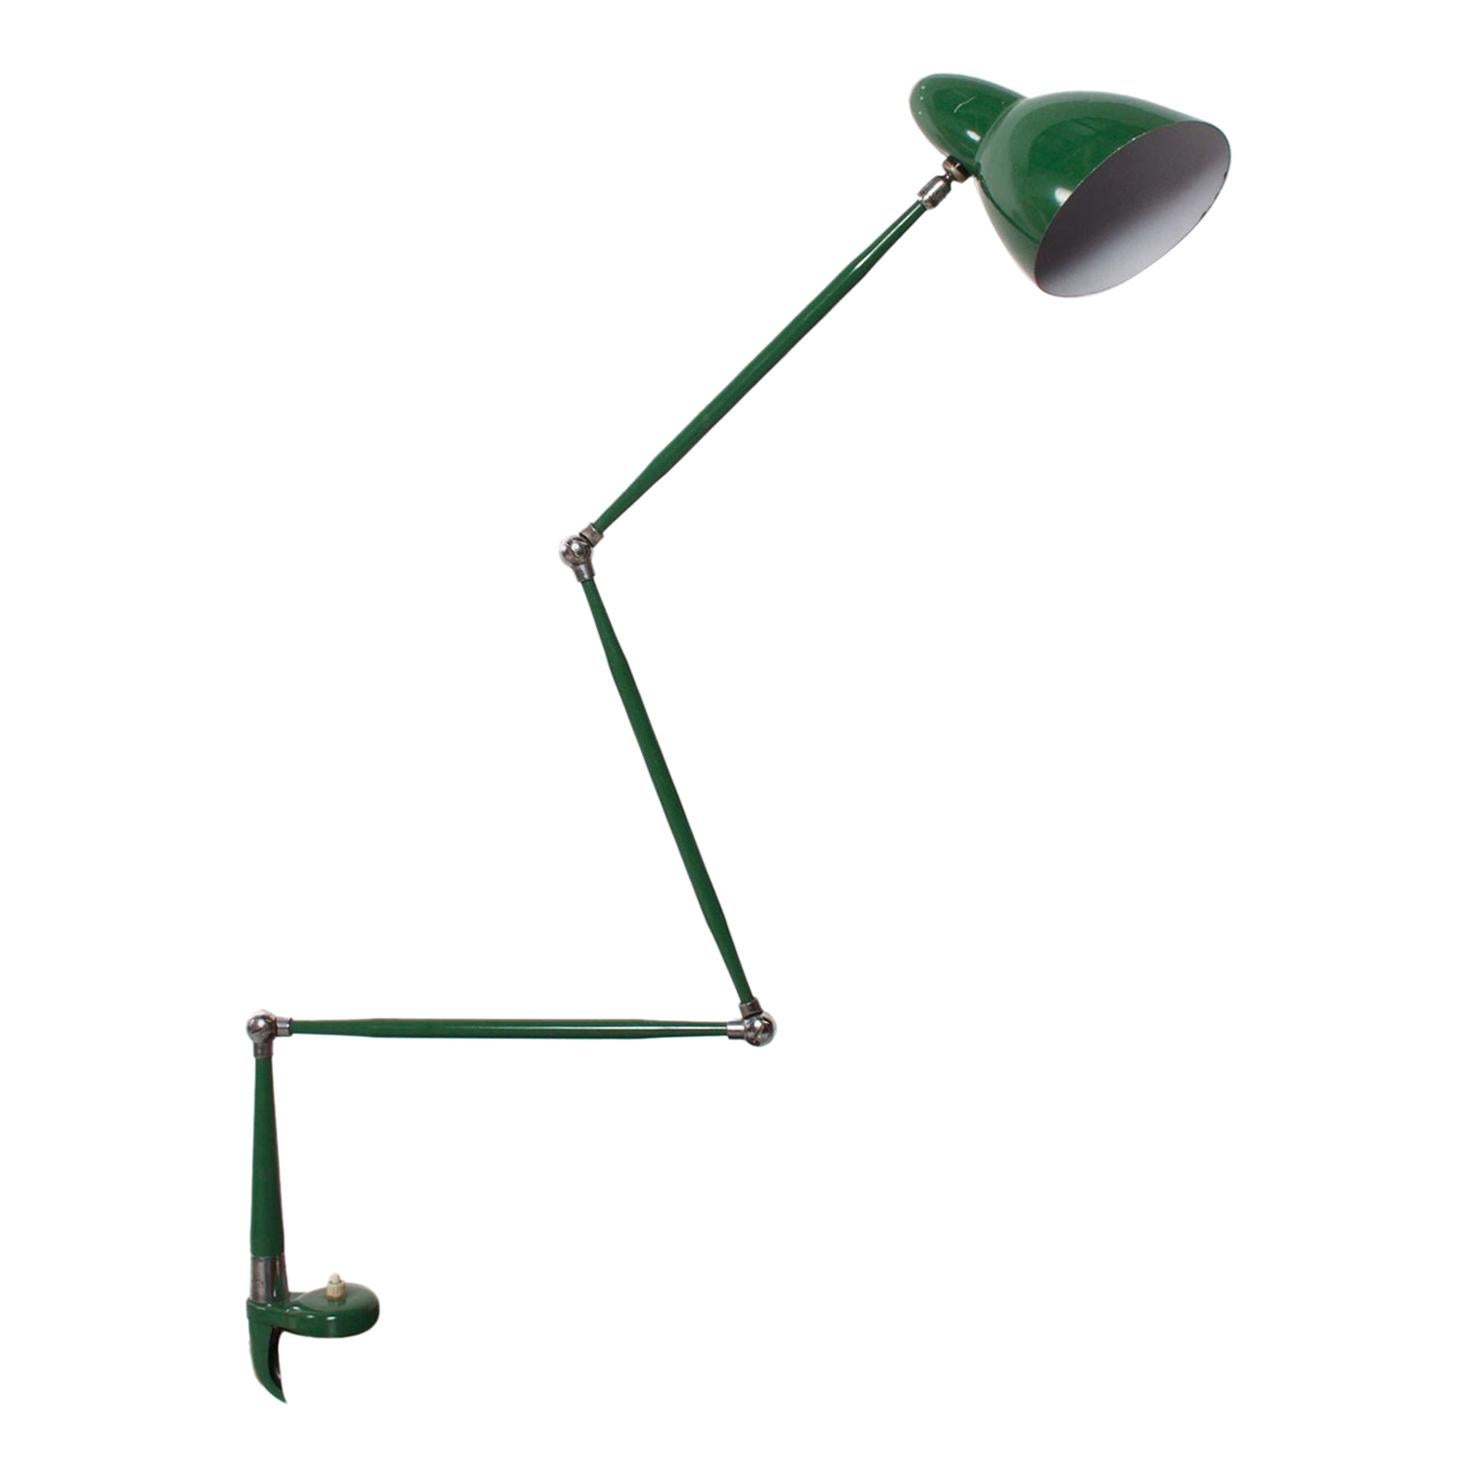 Italian Midcentury Green Adjustable Clamp Task Desk Lamp Stilnovo Style, 1950s